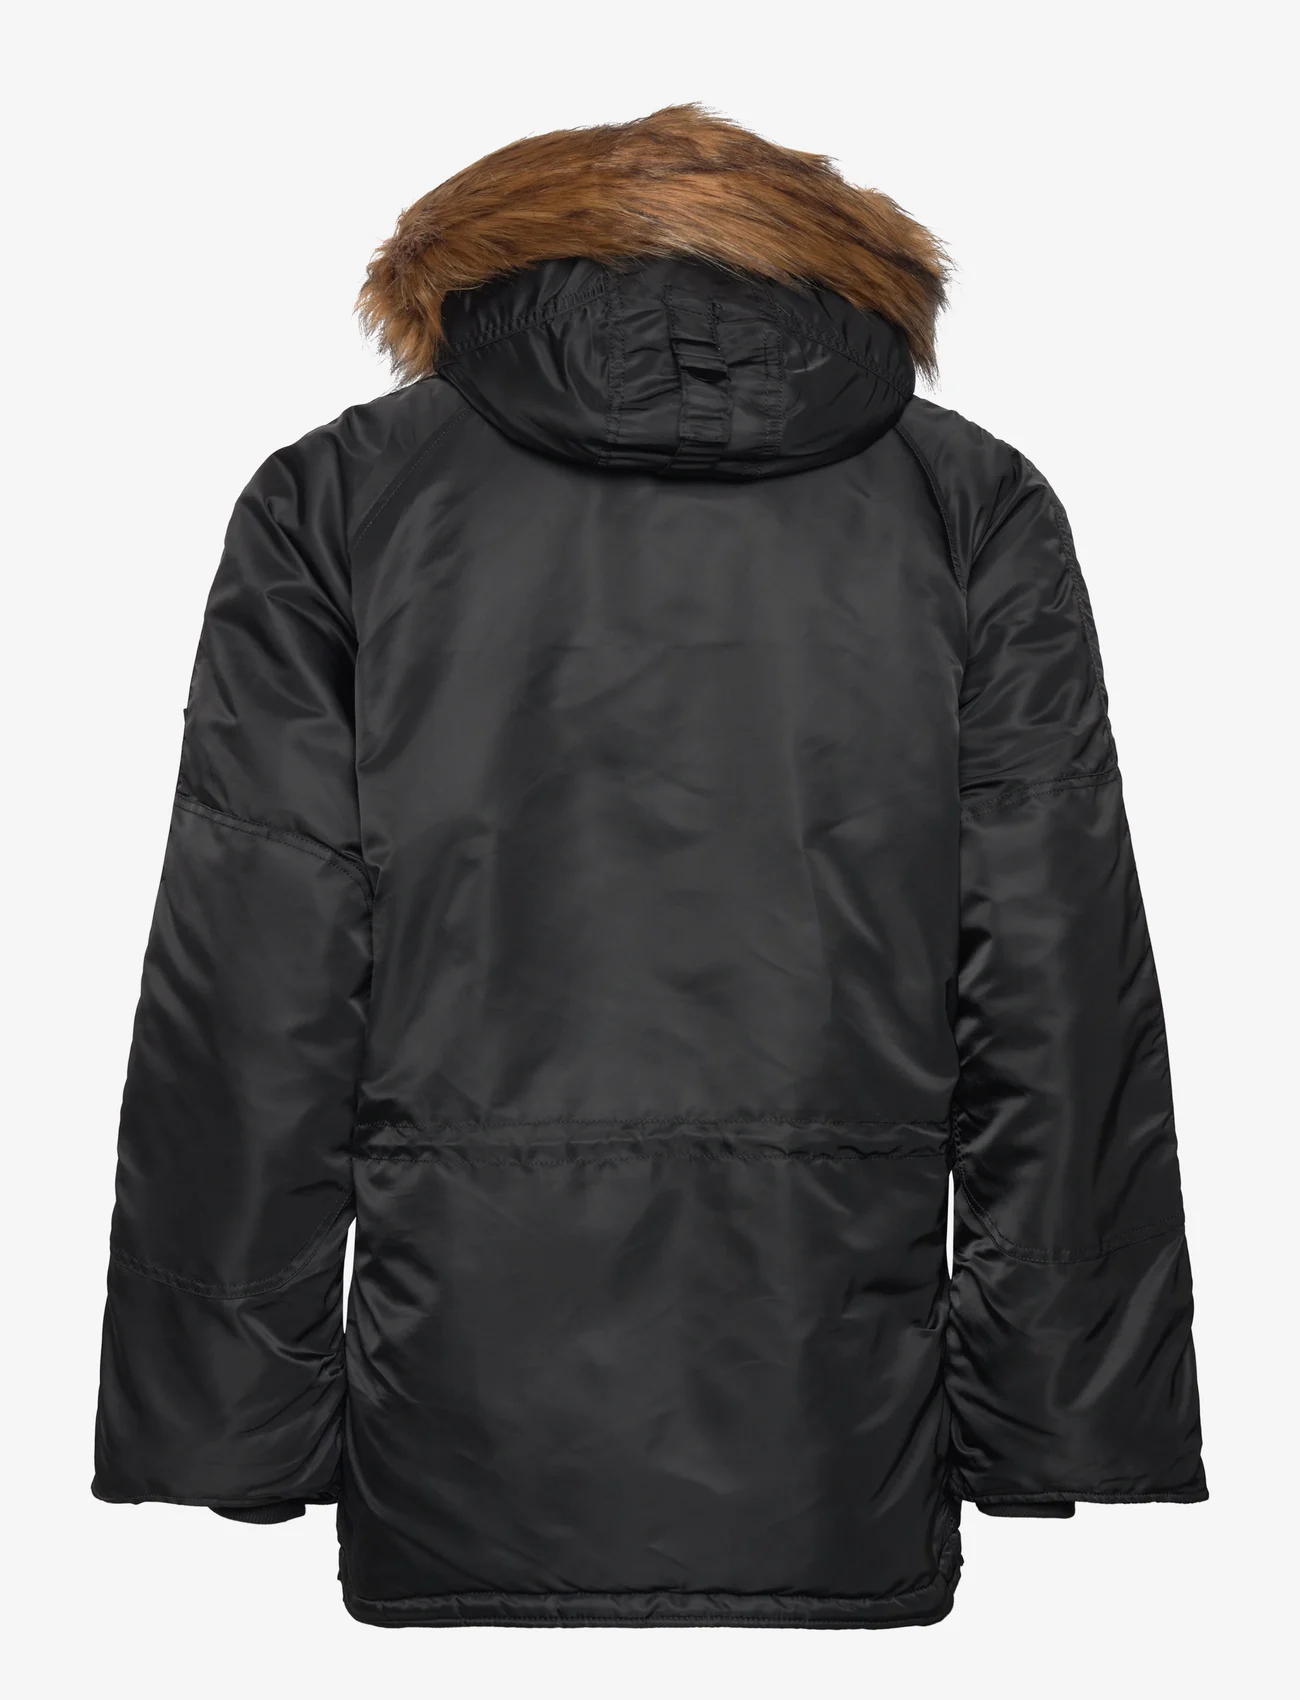 Alpha Industries - N3B - winter jackets - black - 1